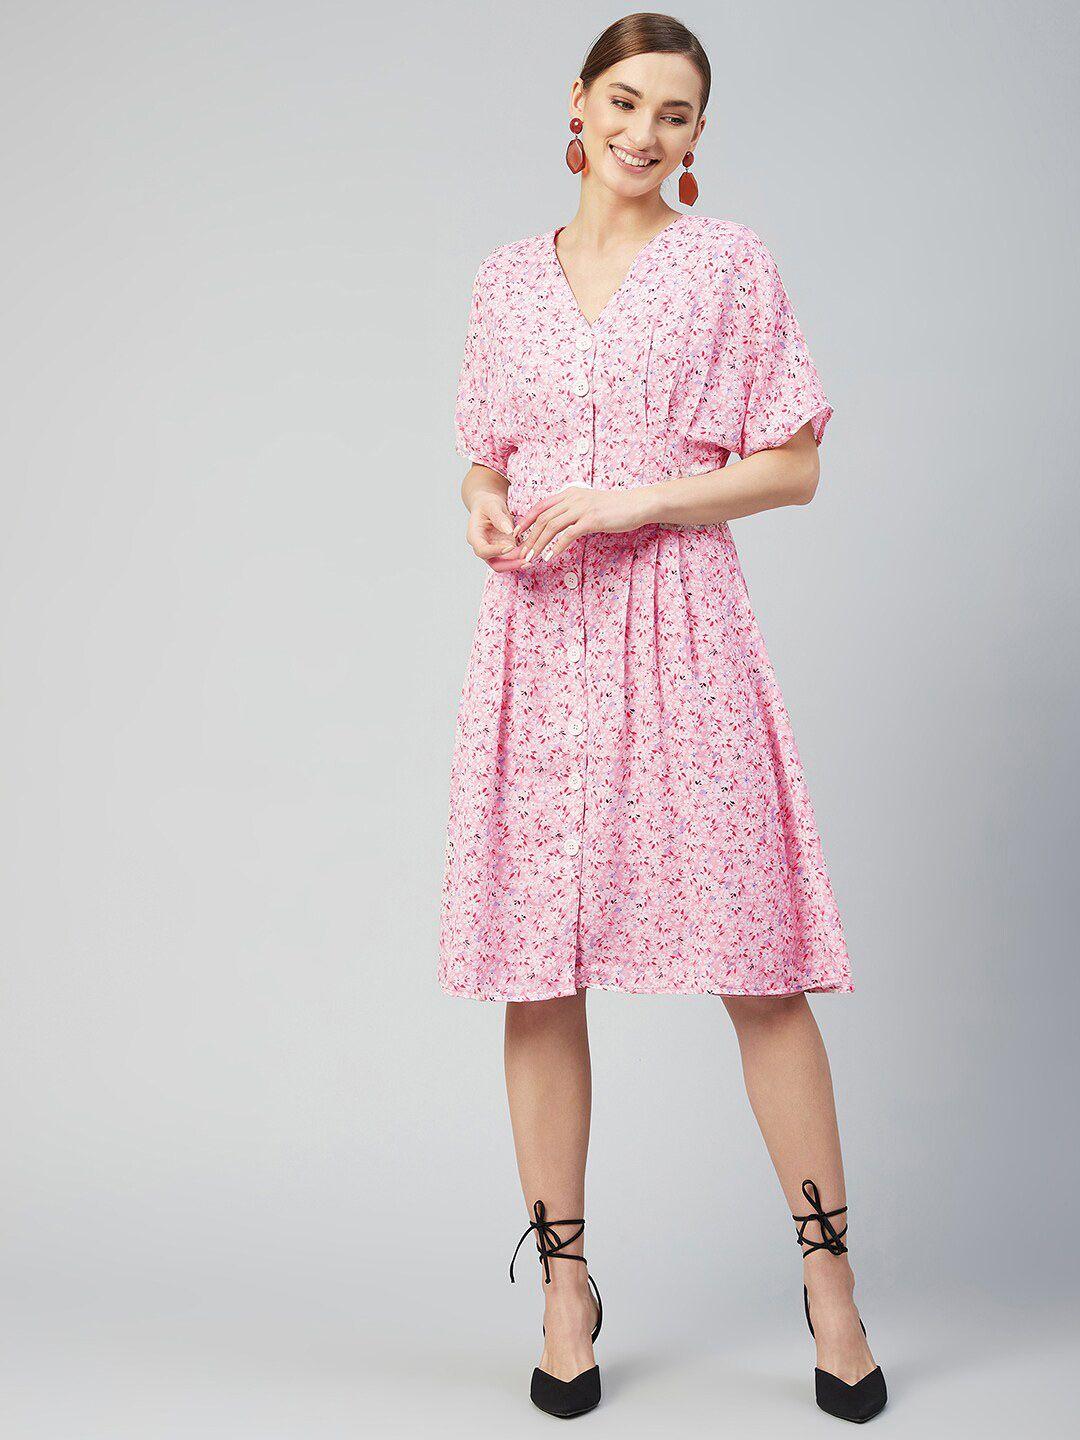 marie claire women pink floral crepe dress